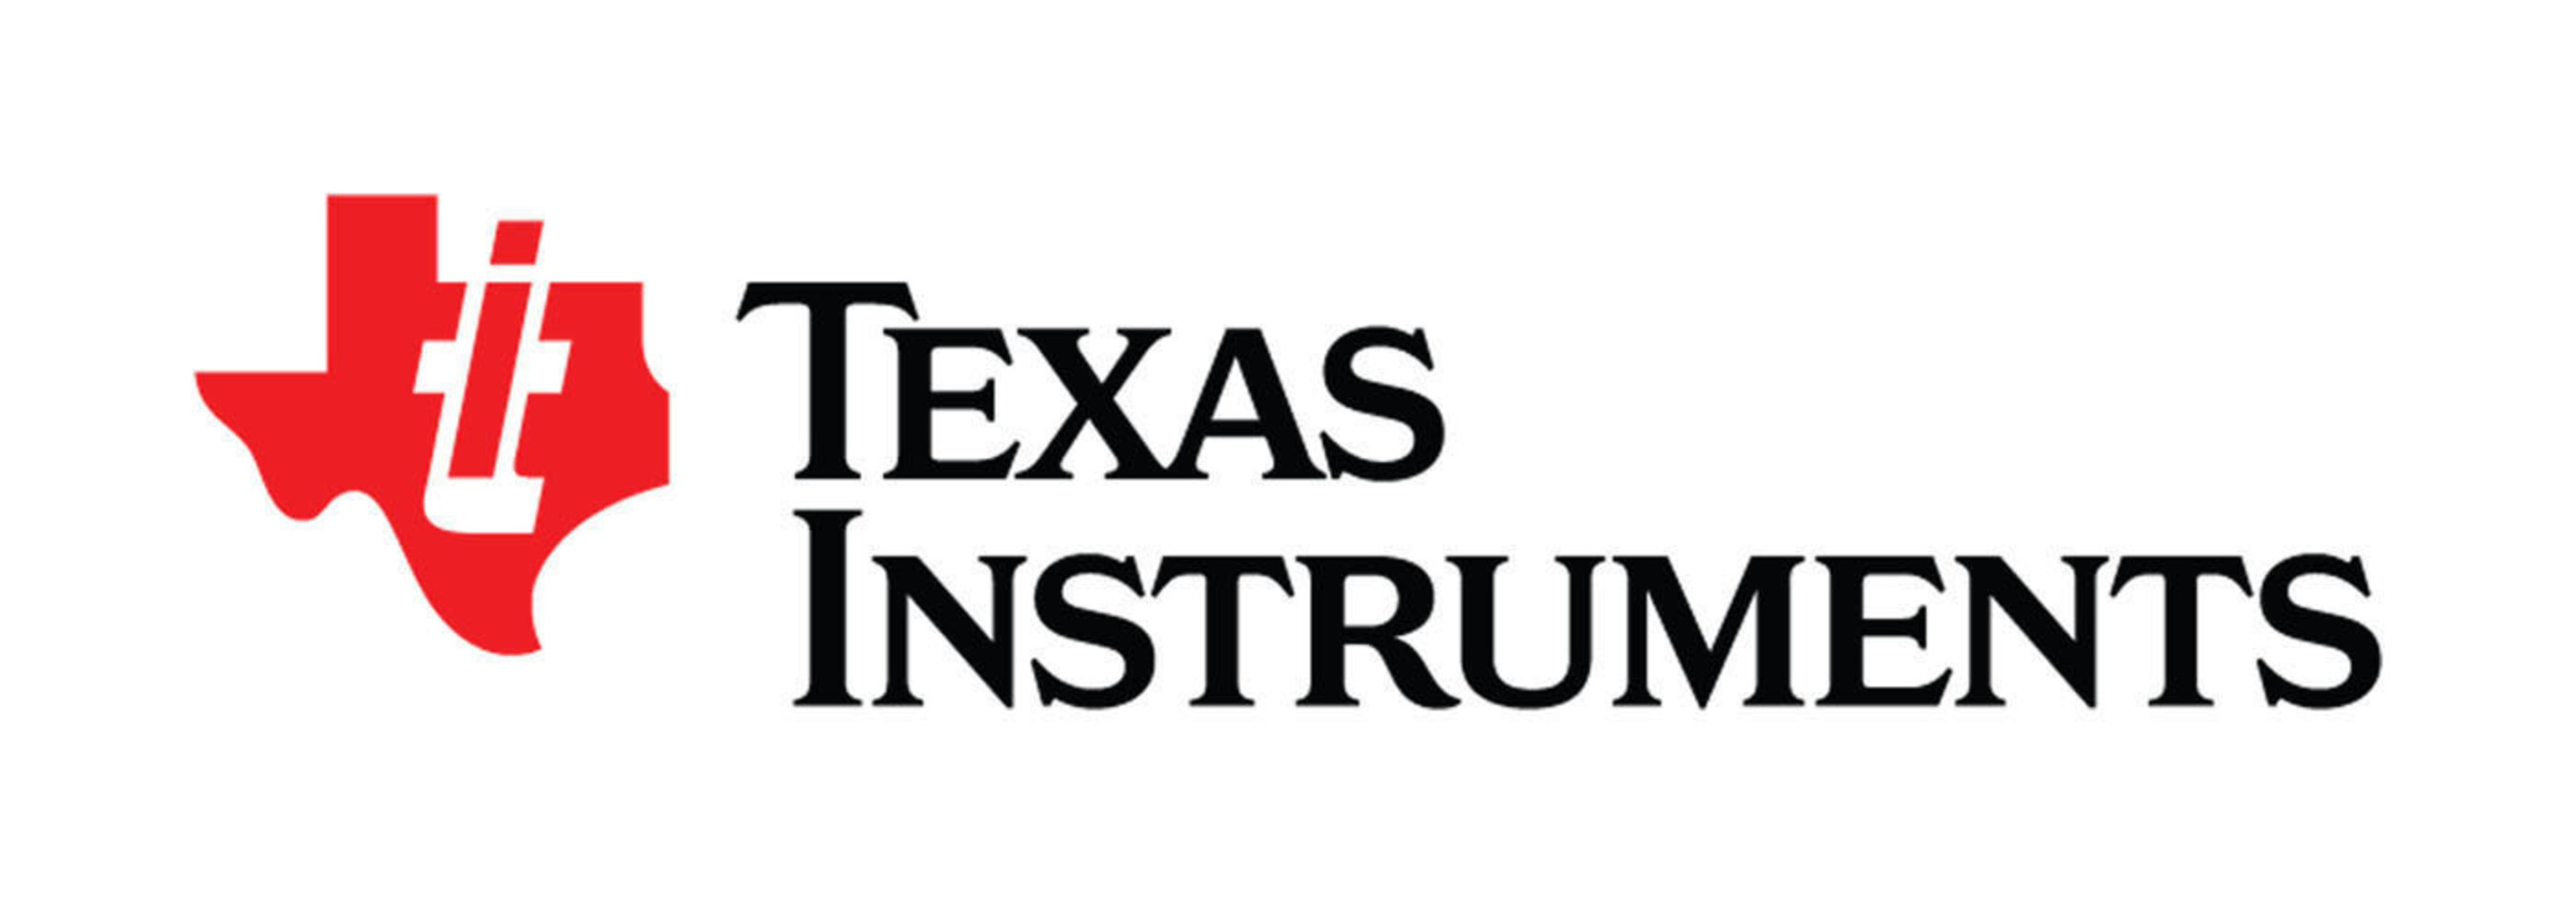 Texas Instruments Logo.